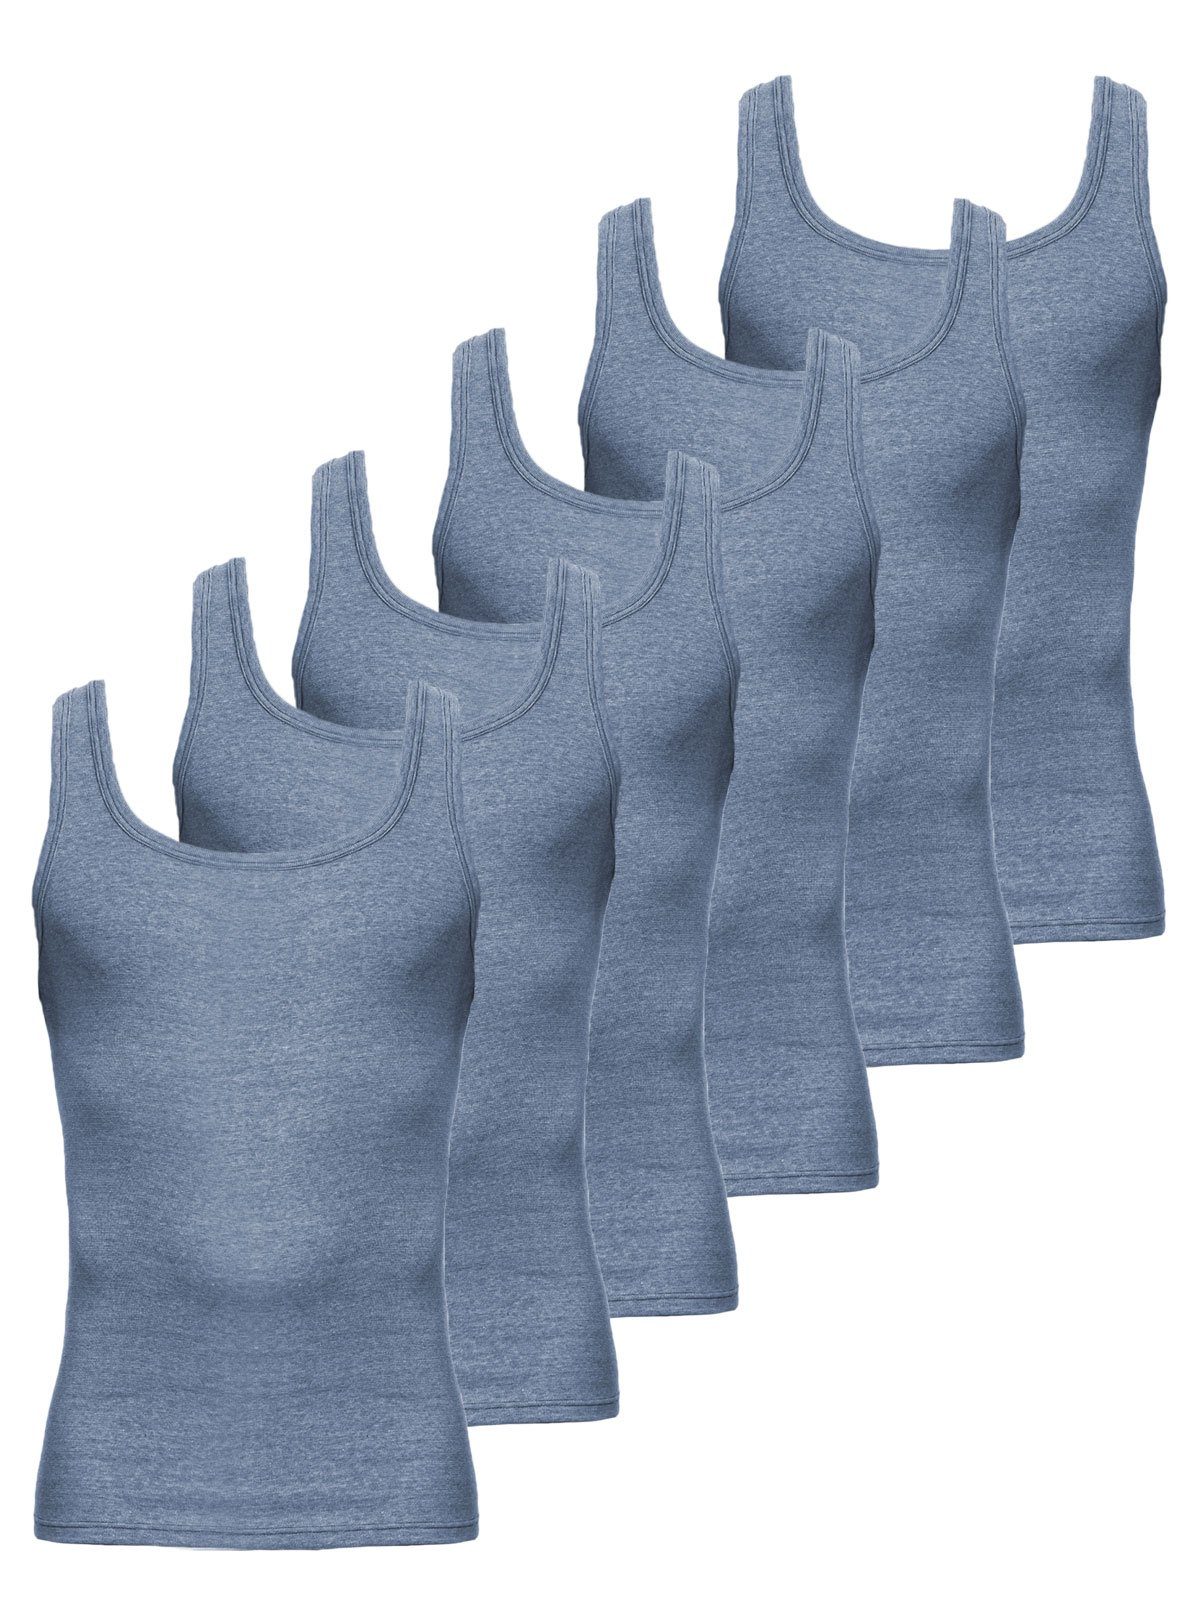 KUMPF Achselhemd 6er Sparpack Herren Unterhemd Feinripp Jeans (Spar-Set, 6-St) hohe Markenqualität marine